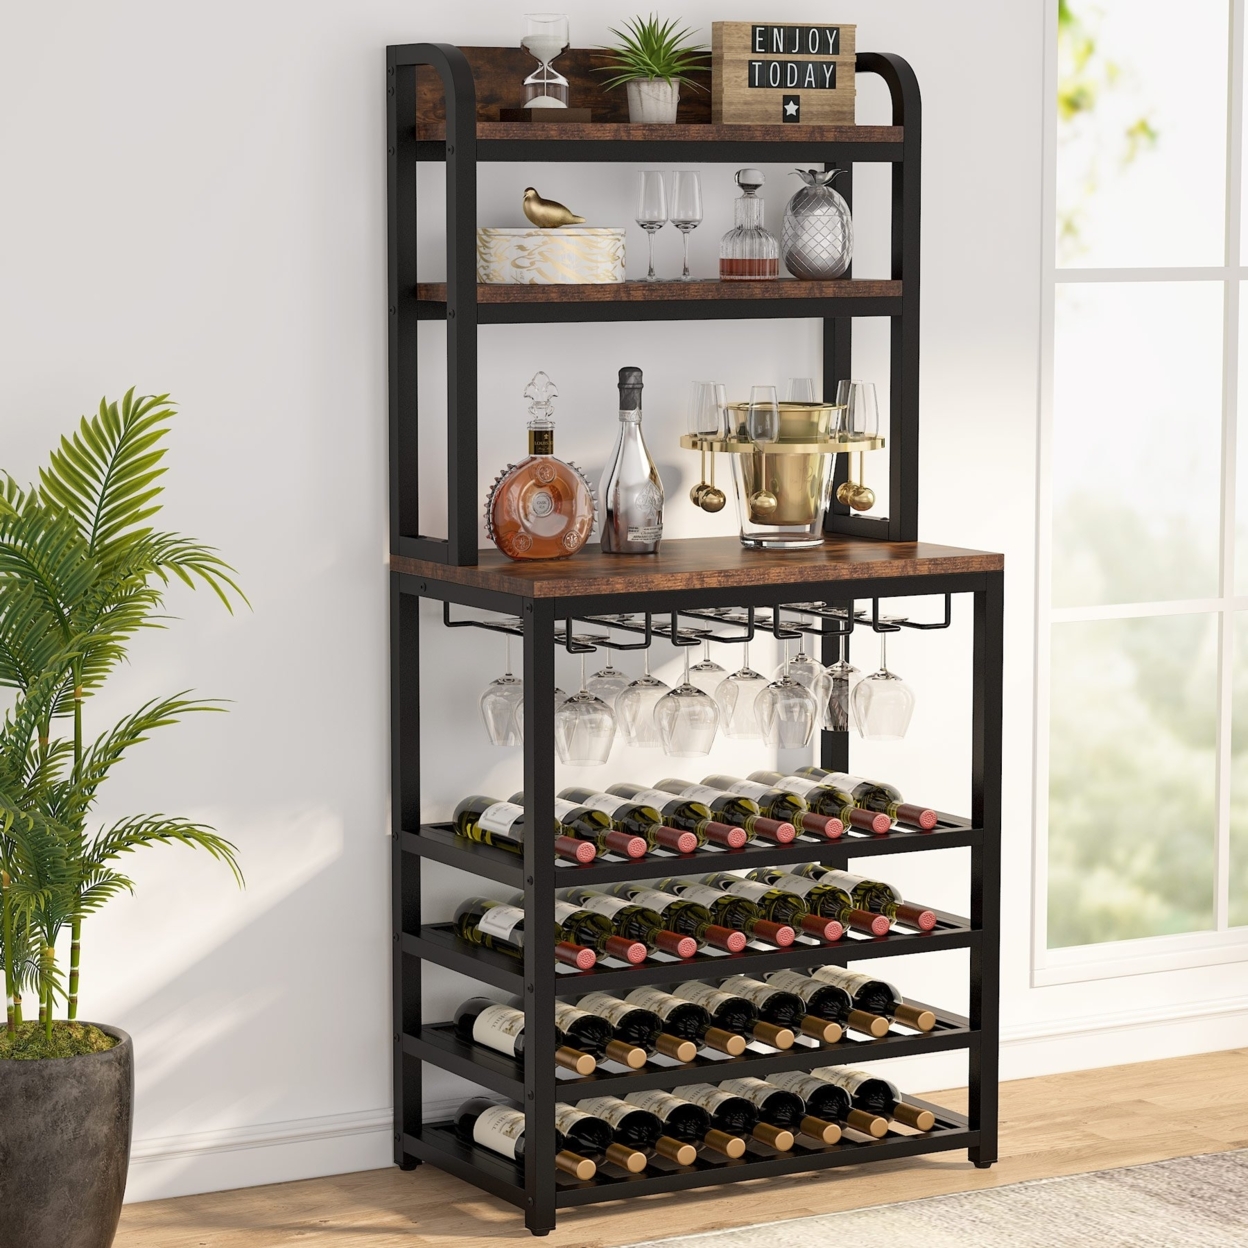 Tribesigns 32 Bottle Wine Rack Freestanding Floor, 7-Tier Wine Storage Display Shelves with Glass Holder